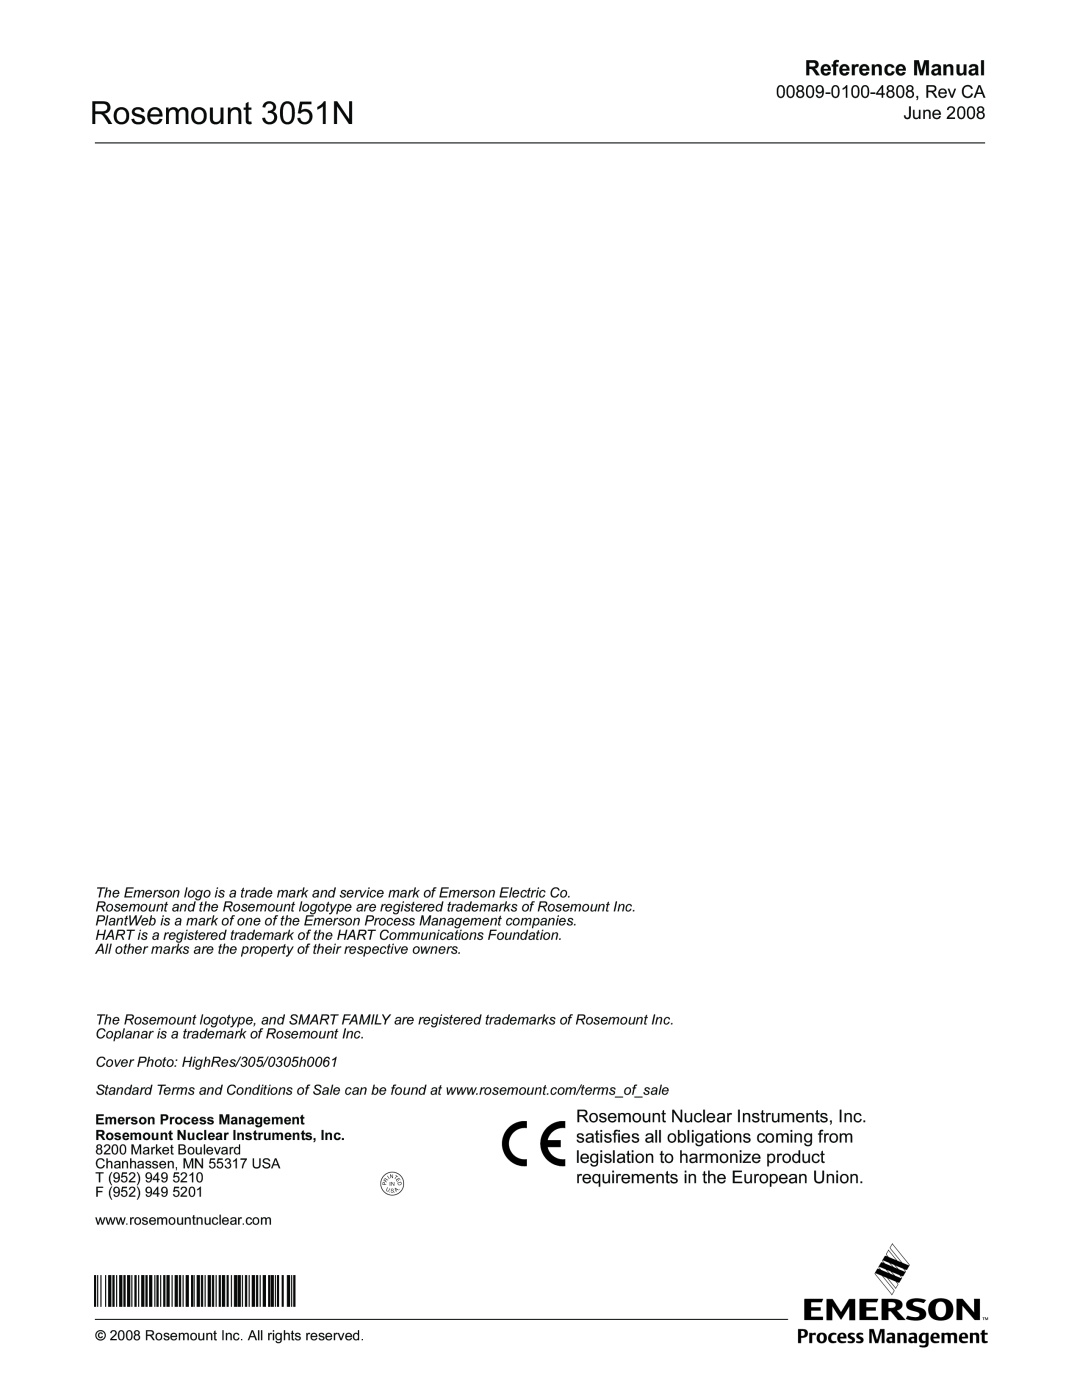 Emerson manual Rosemount 3051N, ¢00809-0100-4801V¤, Reference Manual 